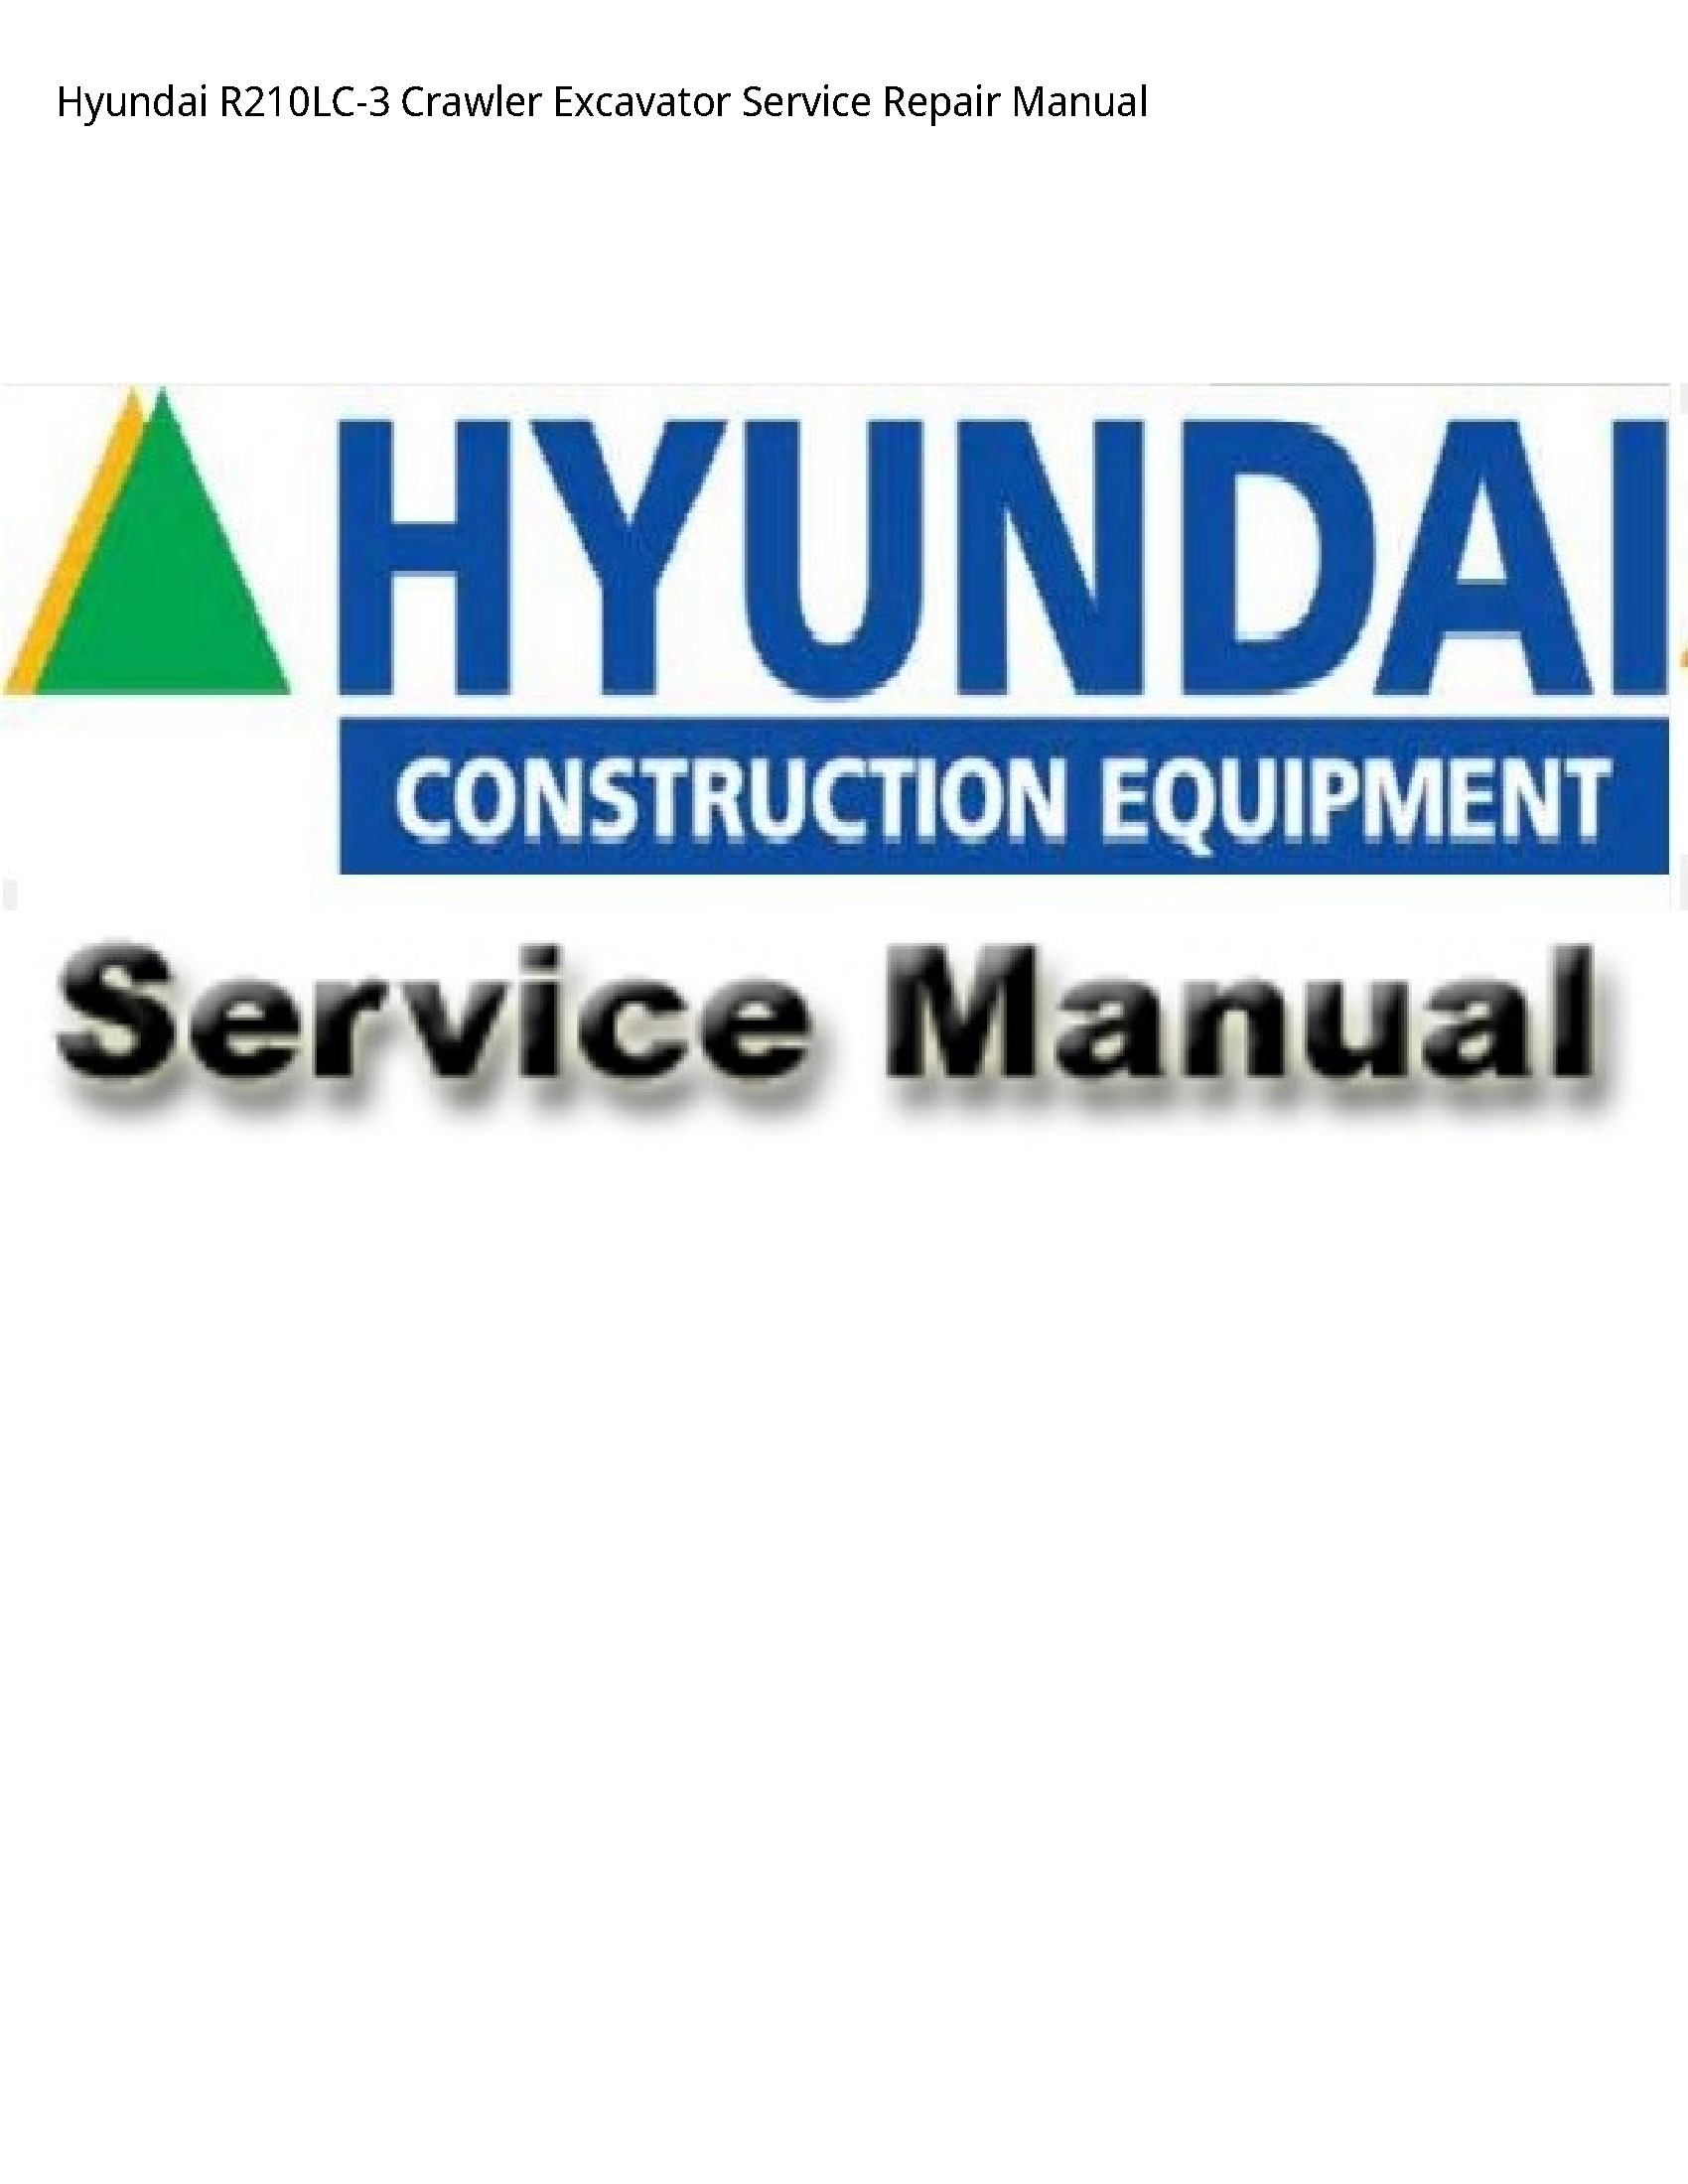 Hyundai R210LC-3 Crawler Excavator manual